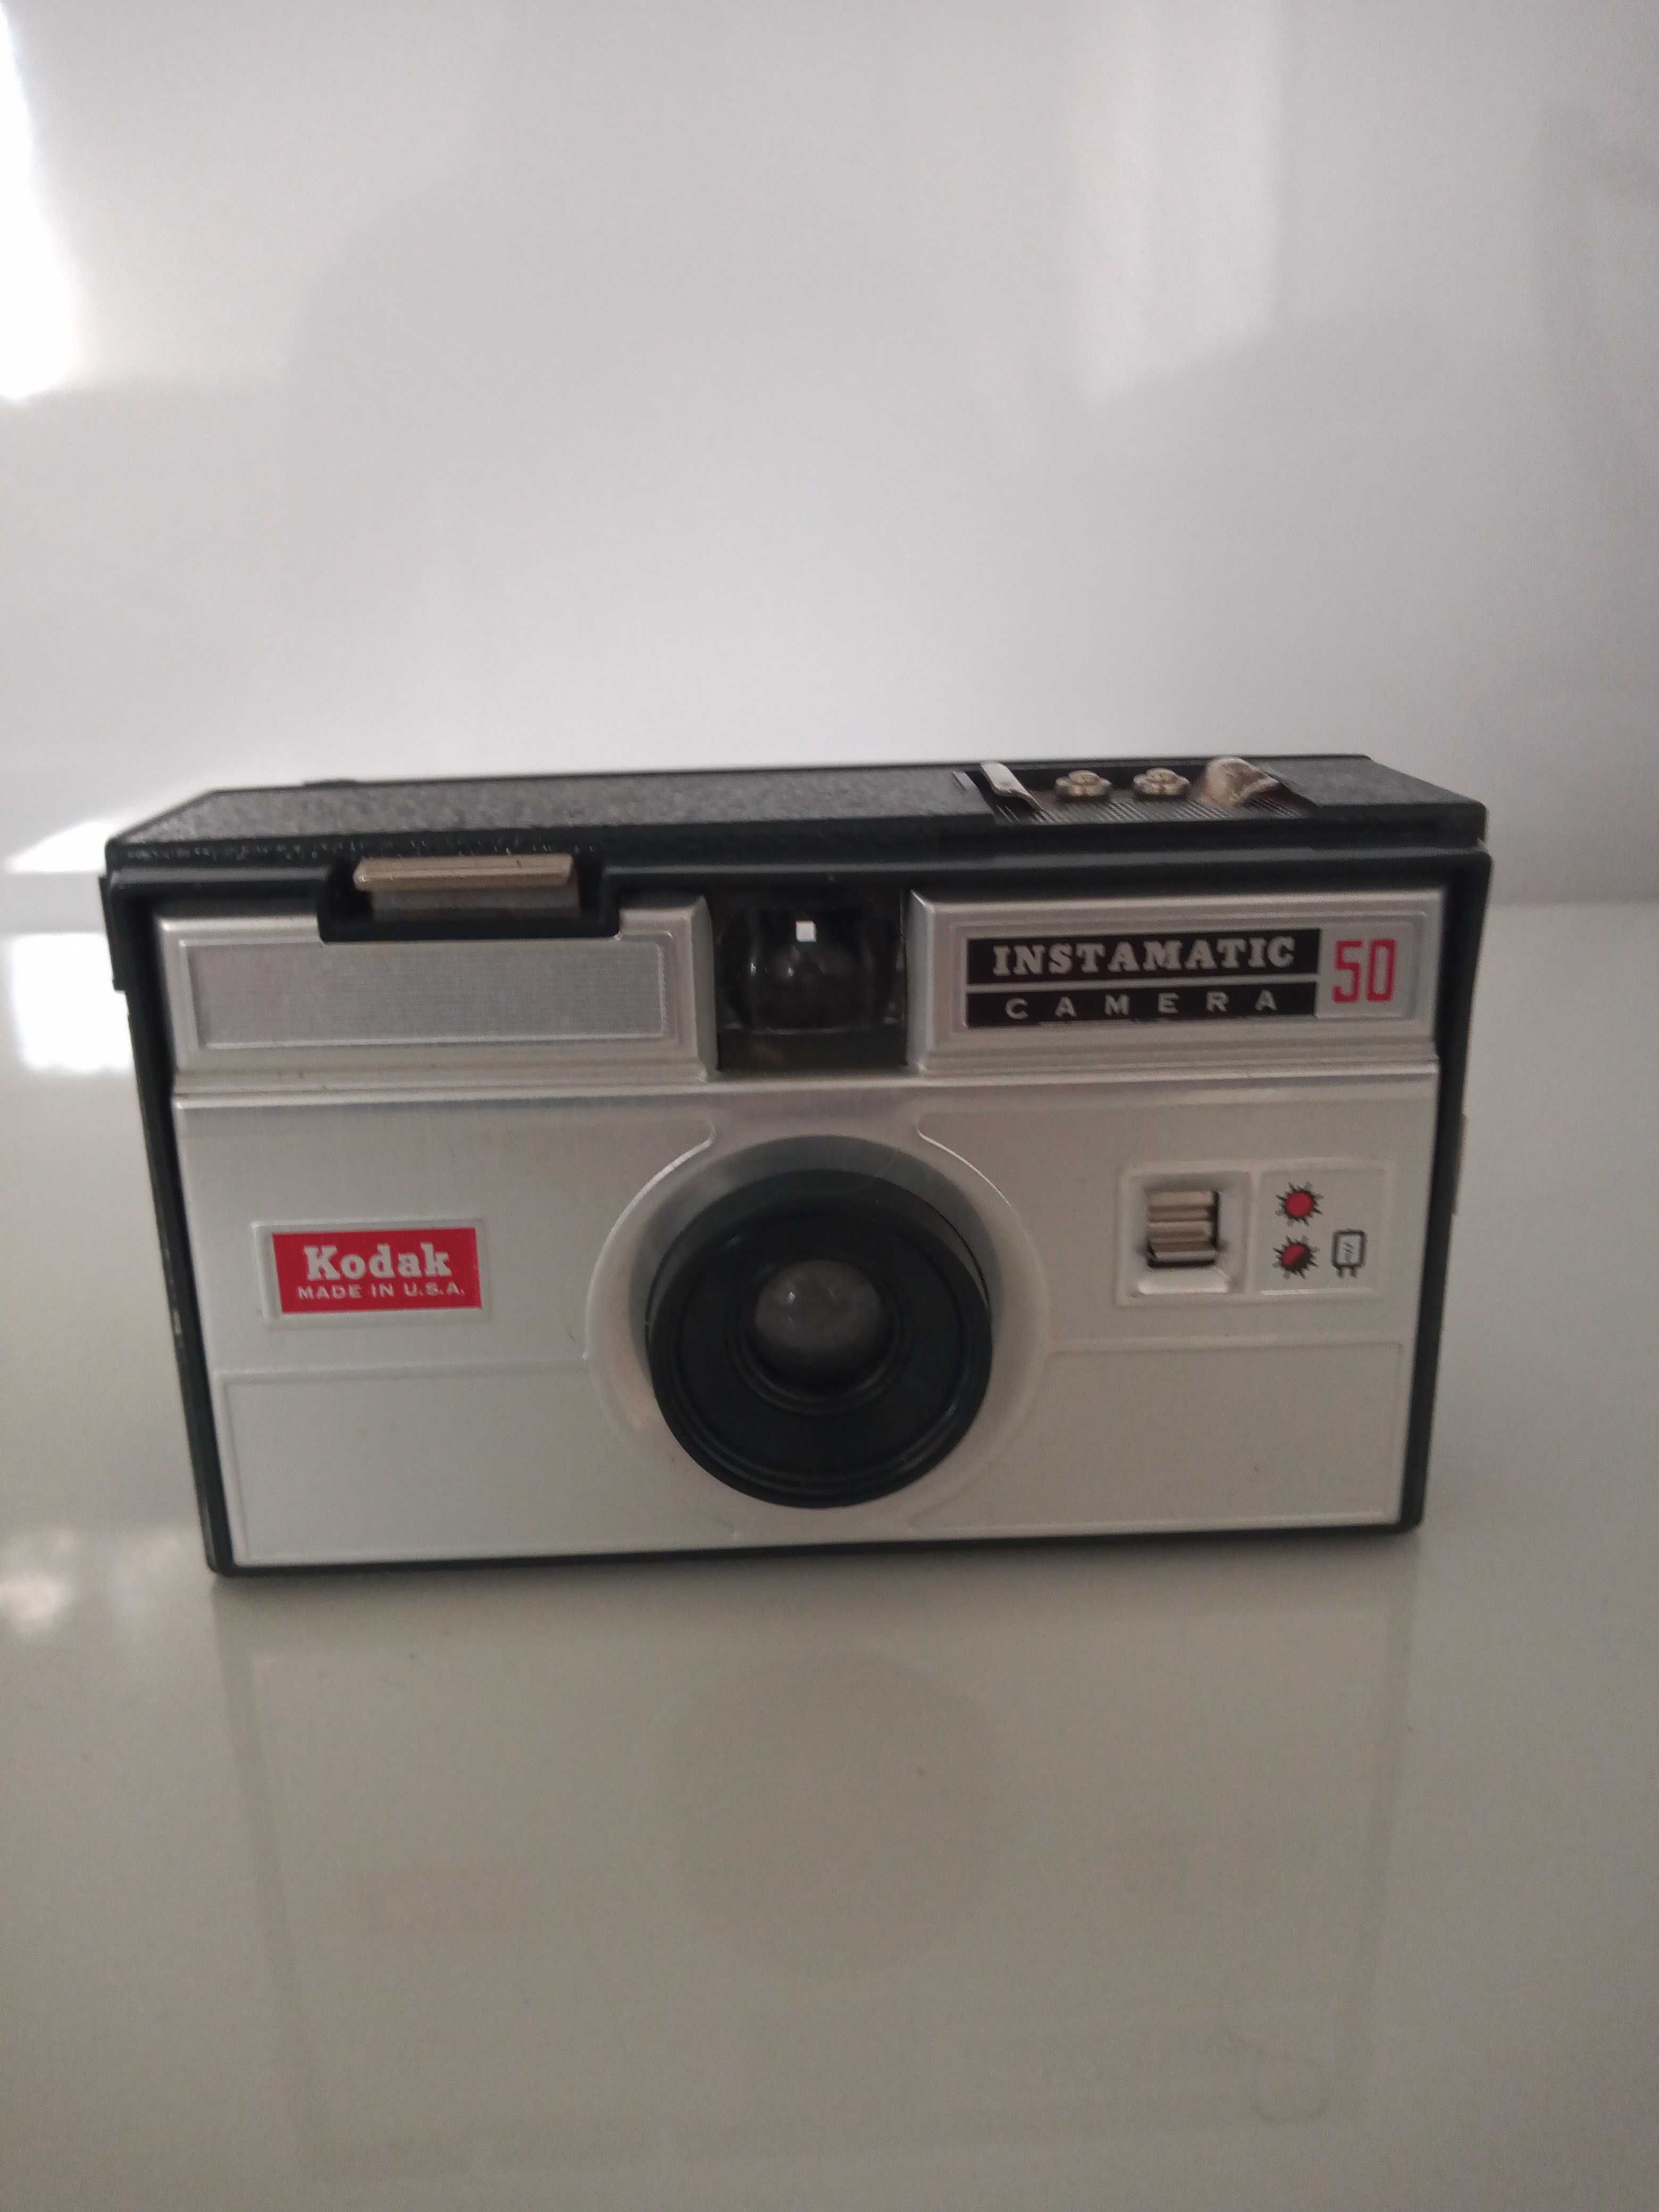 Aparat fotograficzny Kodak Instamatic 50